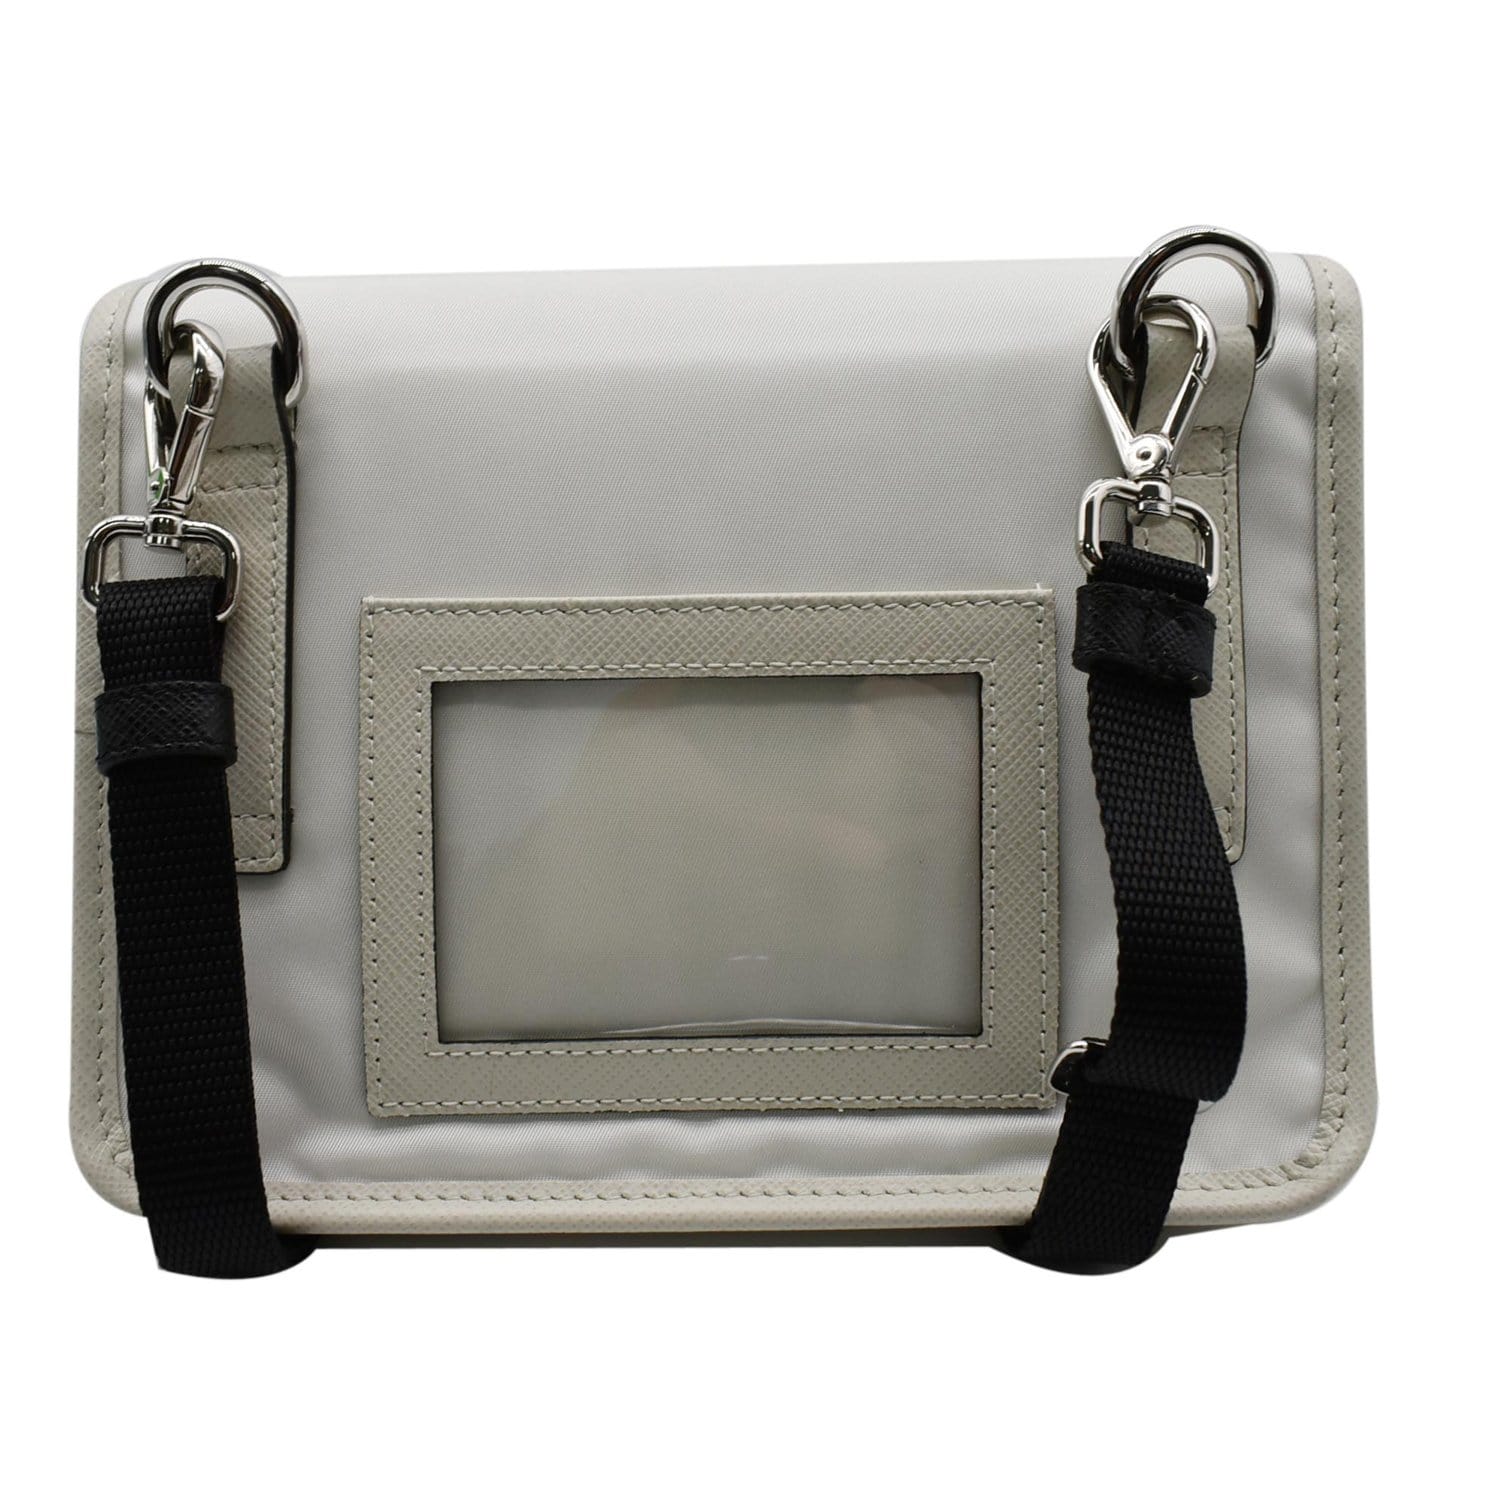 White Saffiano Leather Shoulder Bag